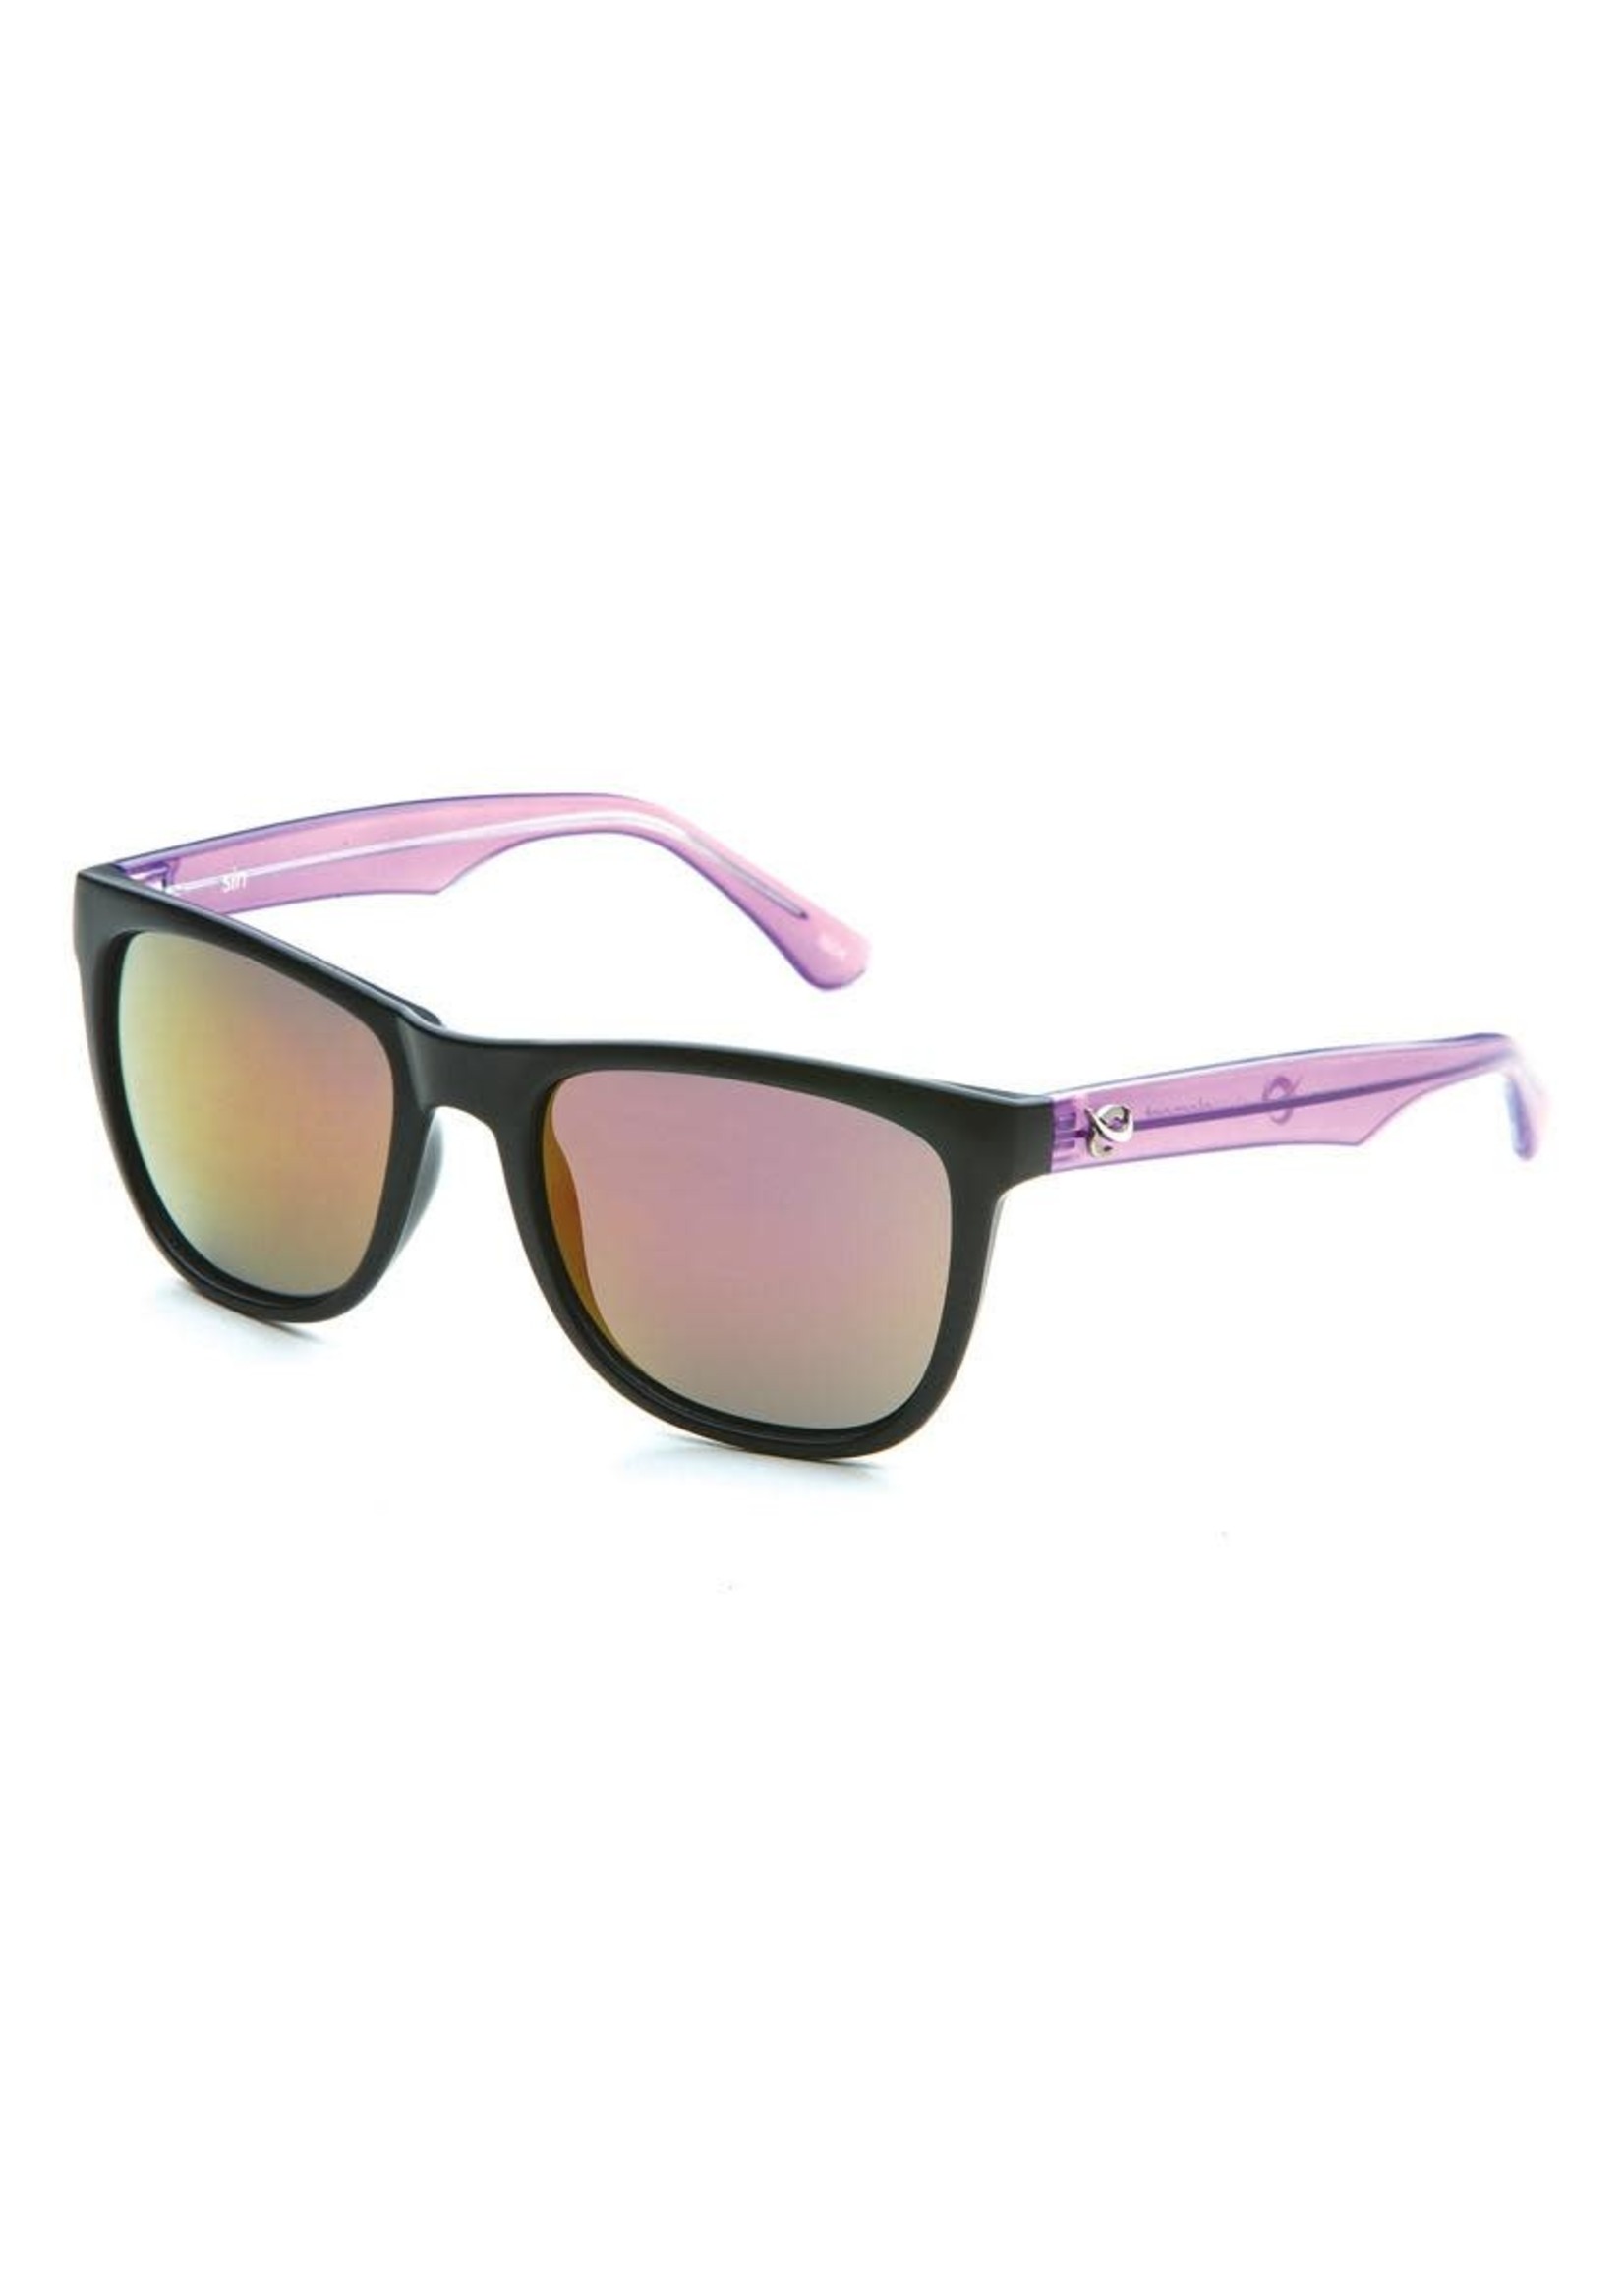 Urban Element Urban Element Premium Sport Sunglasses Women's Sin